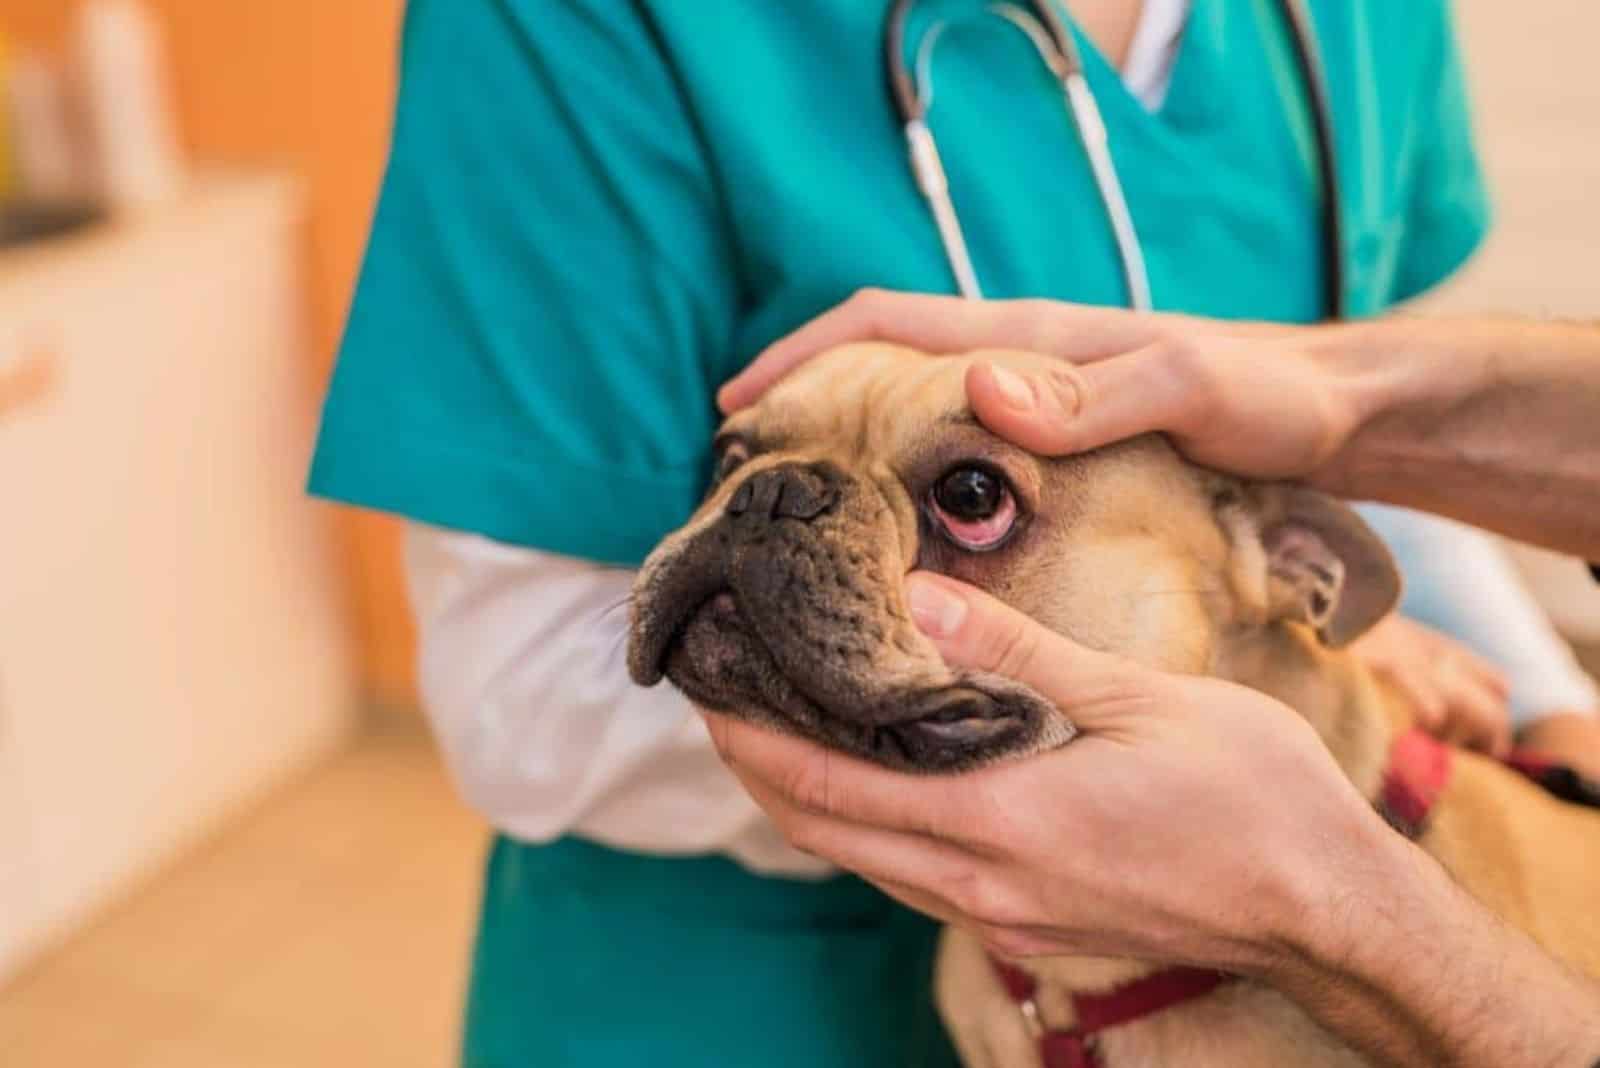 a veterinarian examines a dog's eye